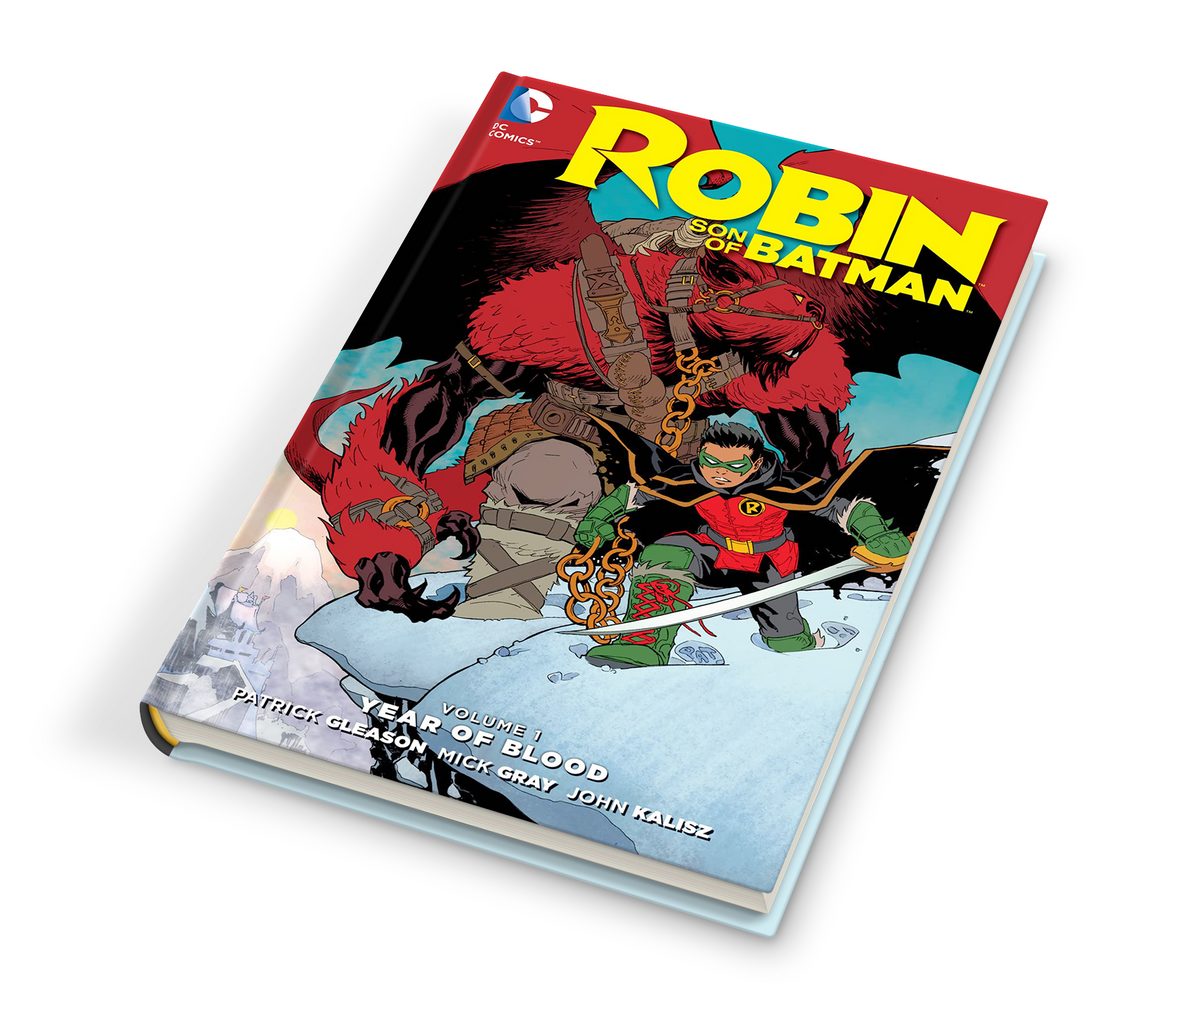 ROBIN SON OF BATMAN HC 1: YEAR OF BLOOD – The Comic Cafe Shop